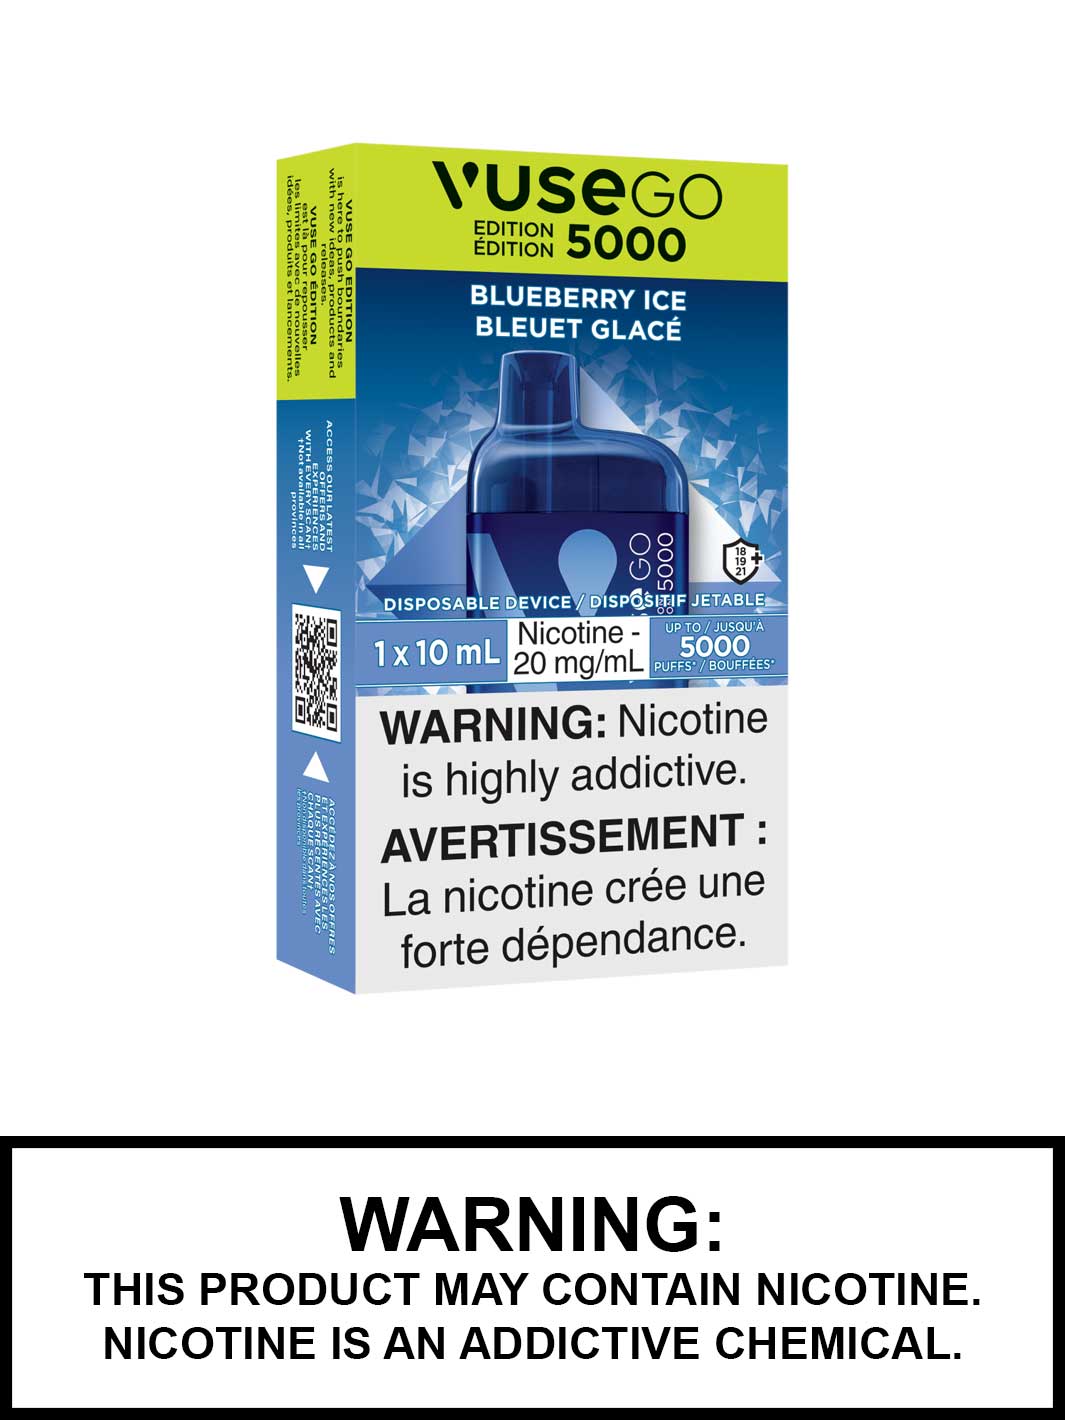 Blueberry Ice Vuse Go 5000 Edition, Vuse Go Disposable Vape Canada, Vape360